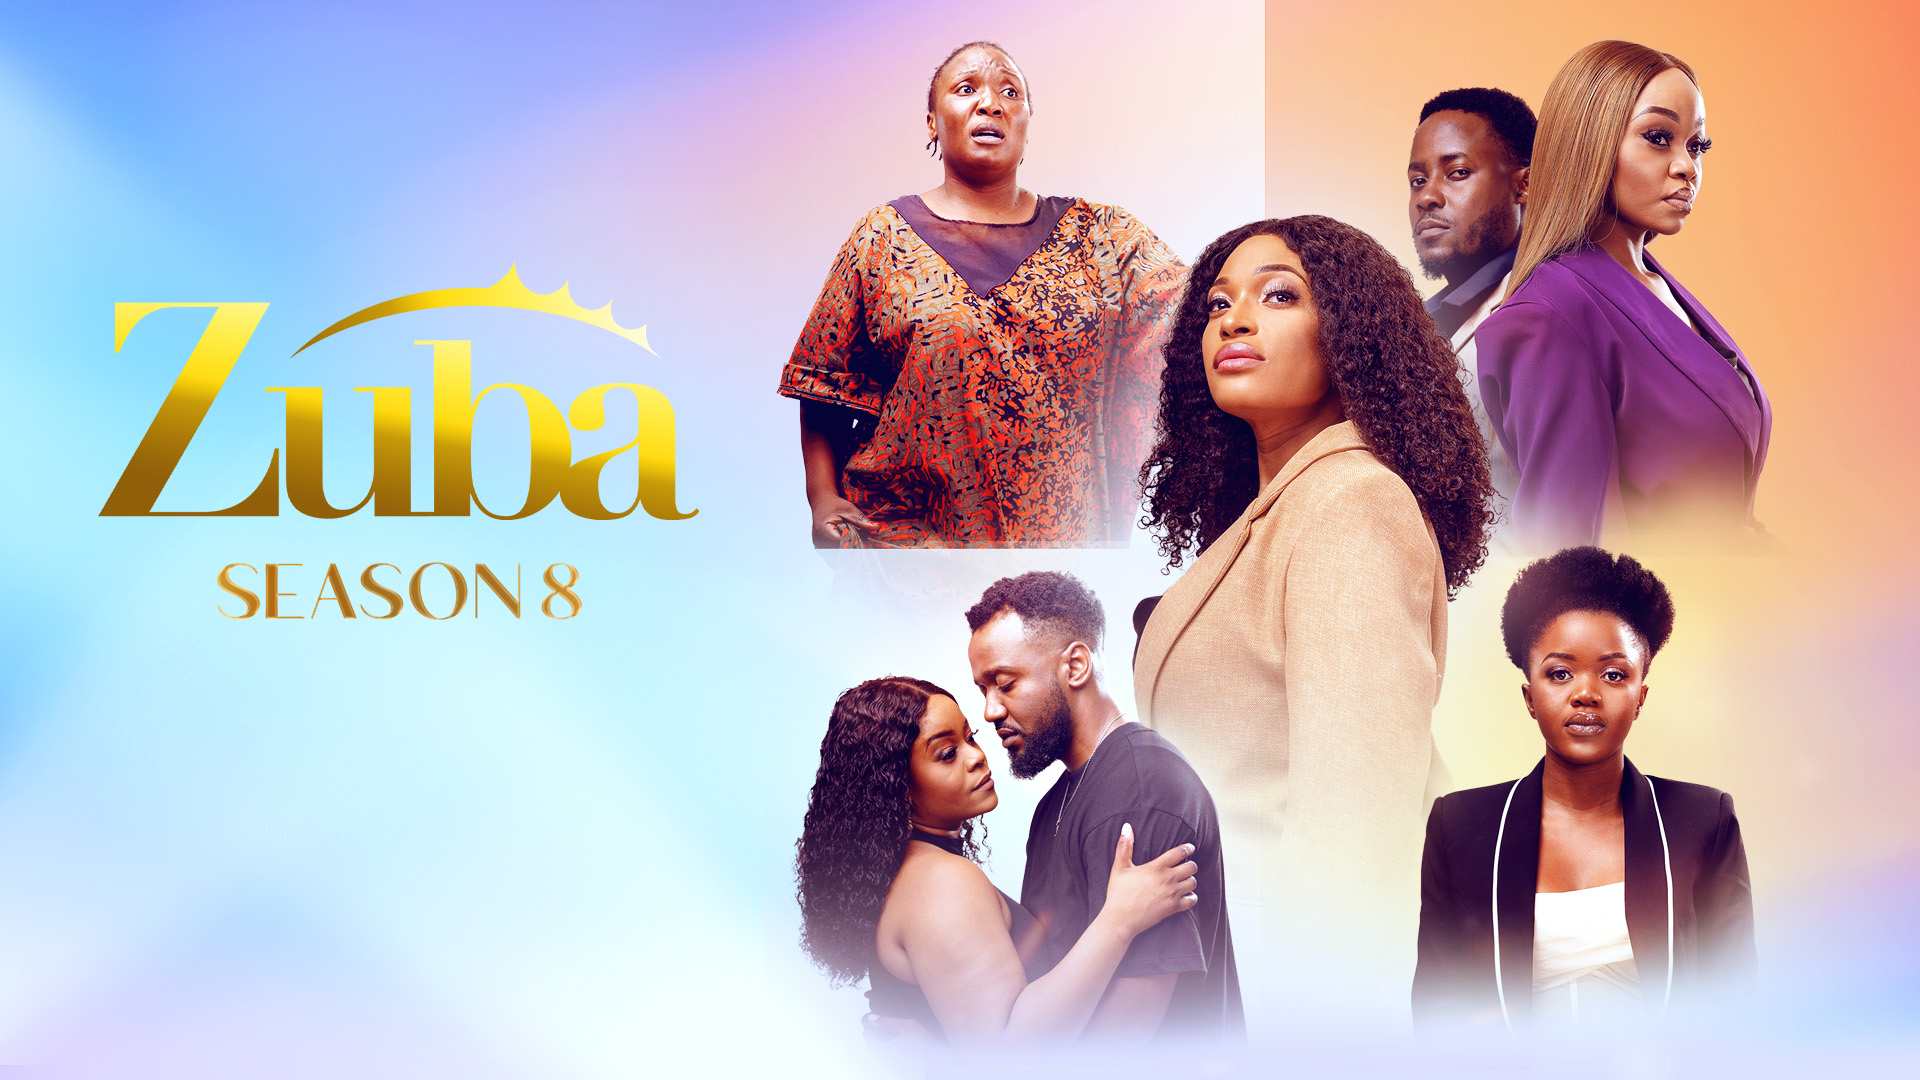 Family ties and fierce fights: Zuba Season 8 is here!